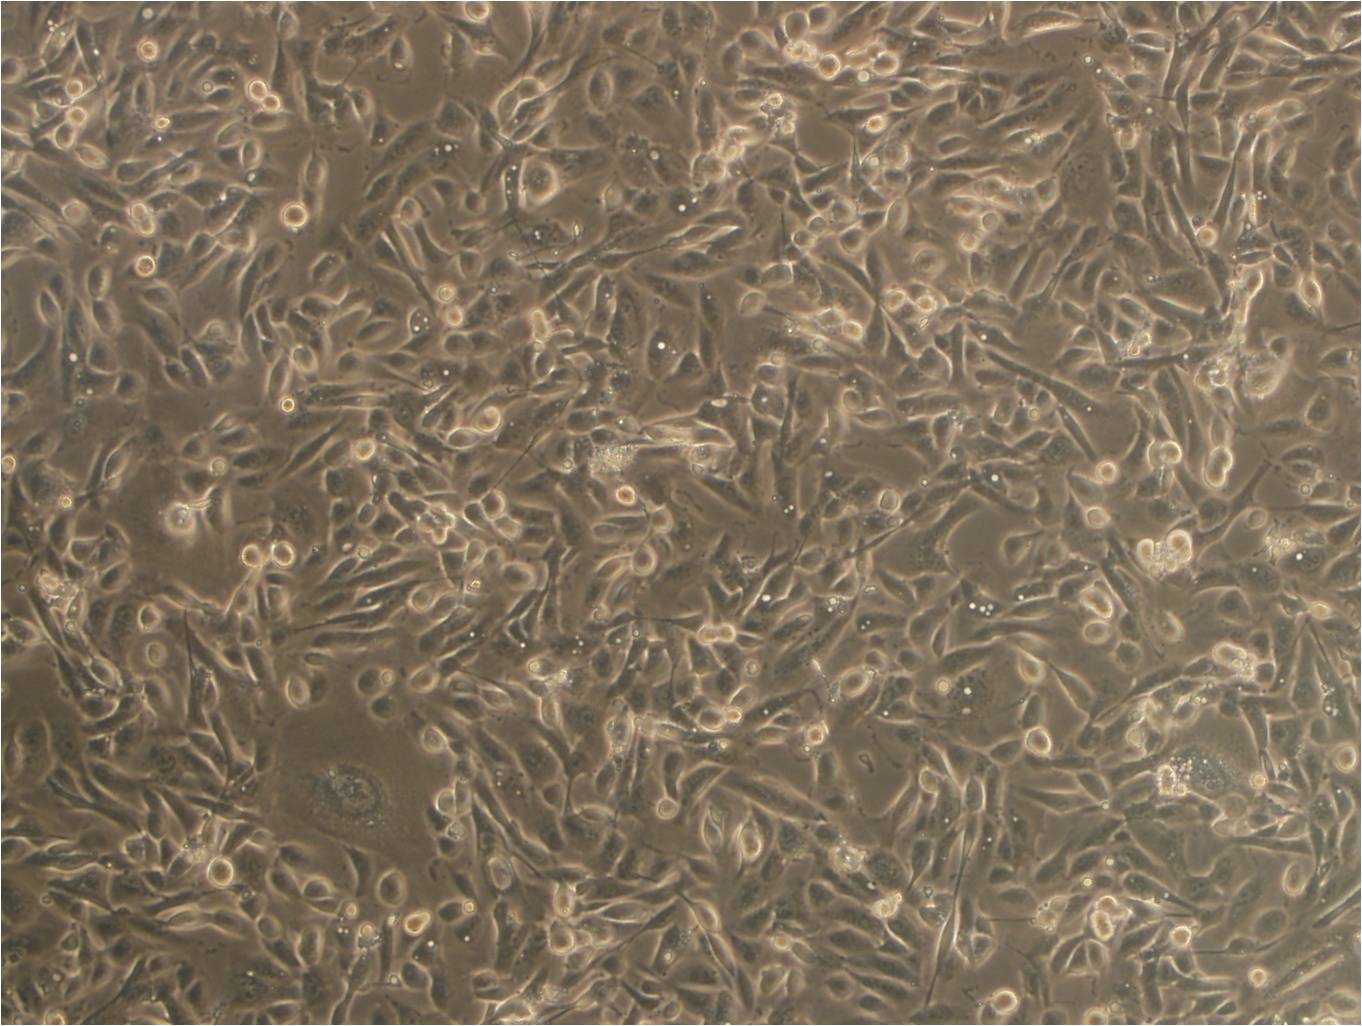 NB4 cell line急性早幼粒细胞系